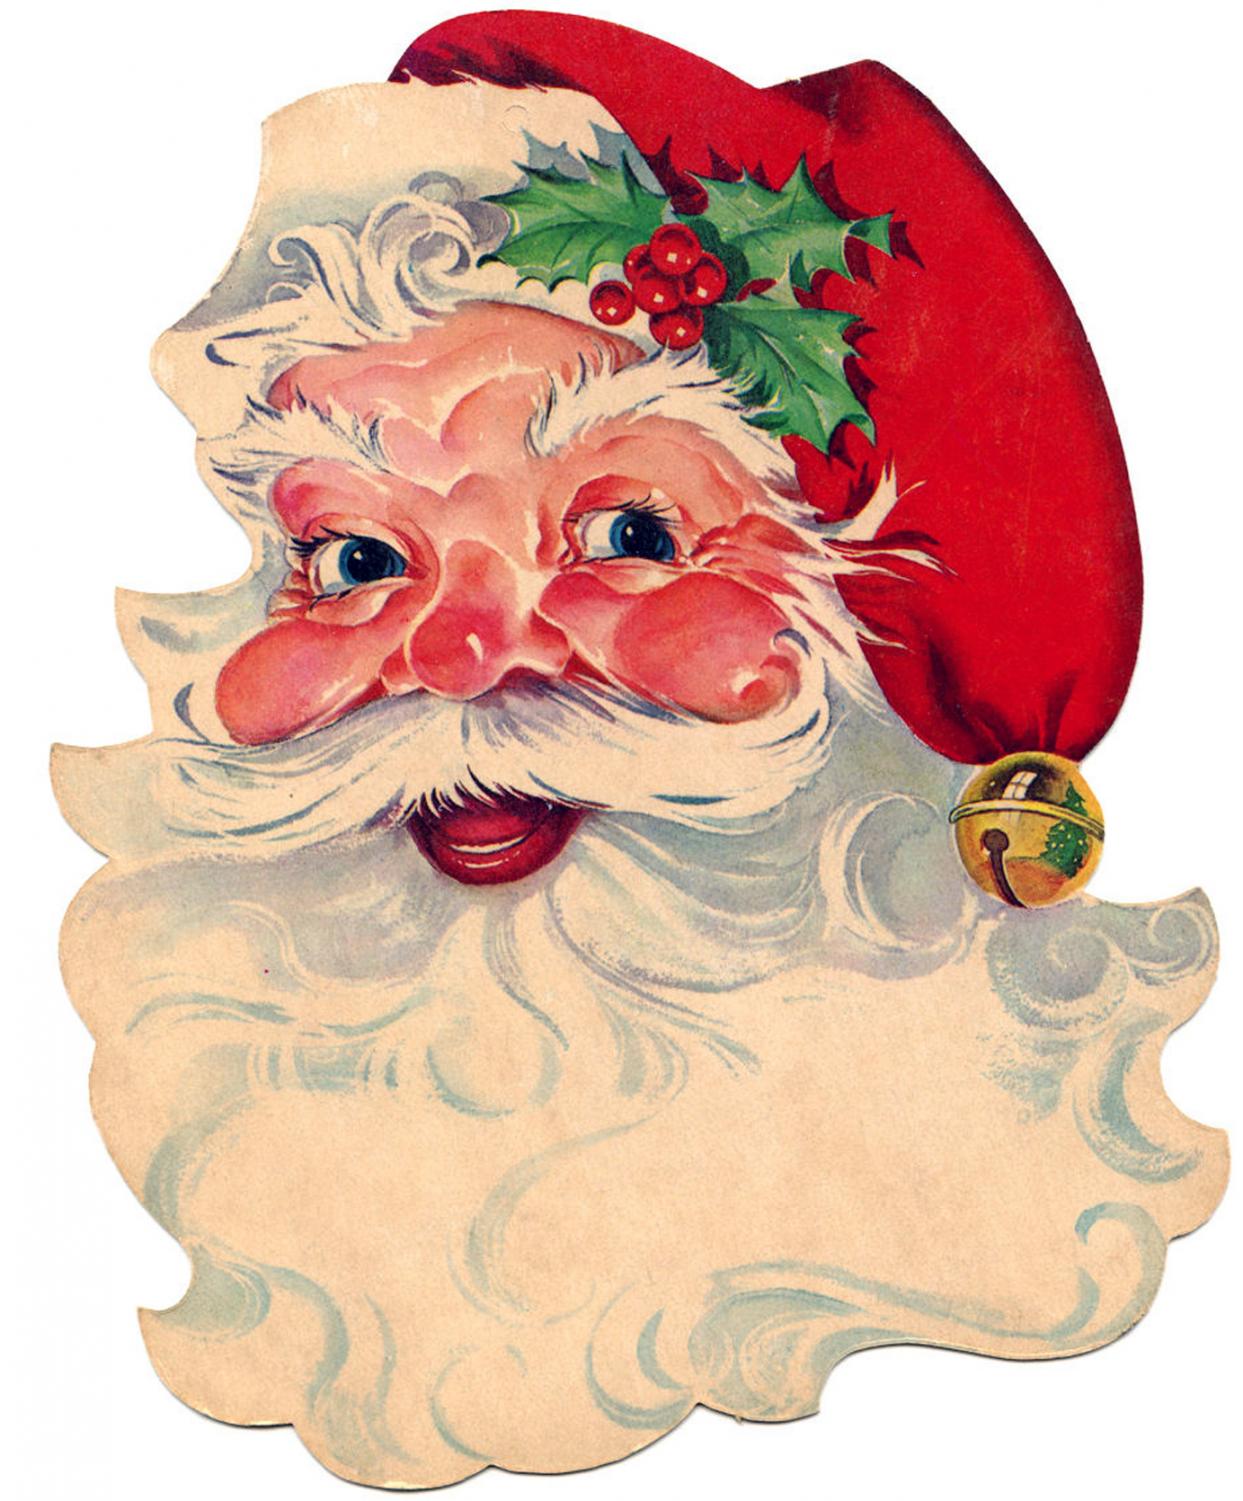 https://twhscaledonian.com/wp-content/uploads/2020/12/Santa-Face-Clip-Art-GraphicsFairy.jpg